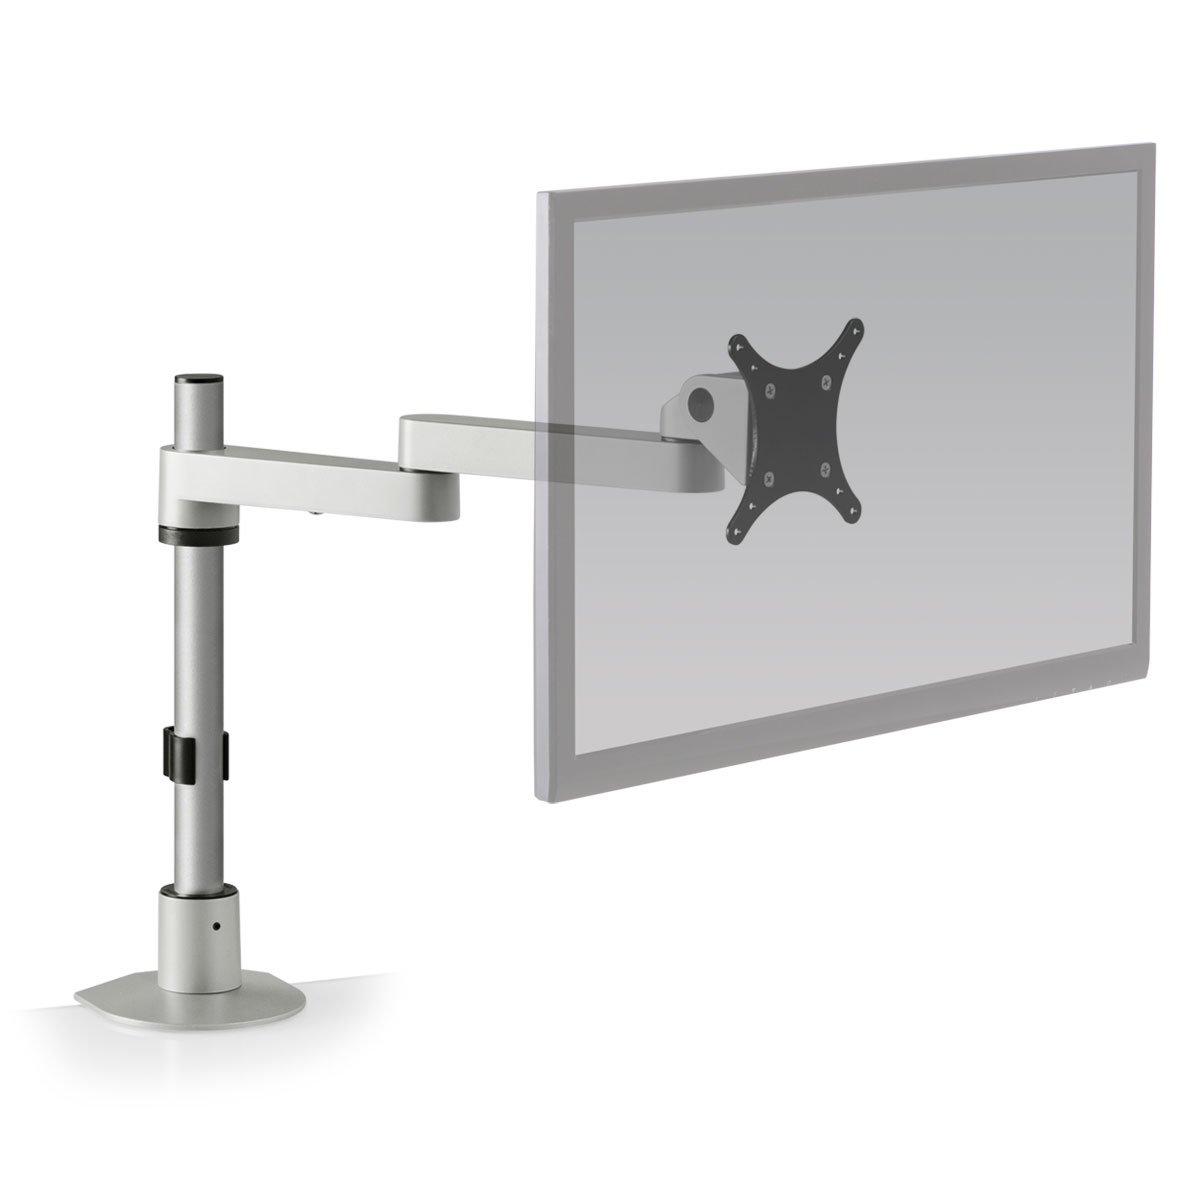 Innovative 9130-S-14 Long Reach Flat Panel LCD Mount - 14" Pole